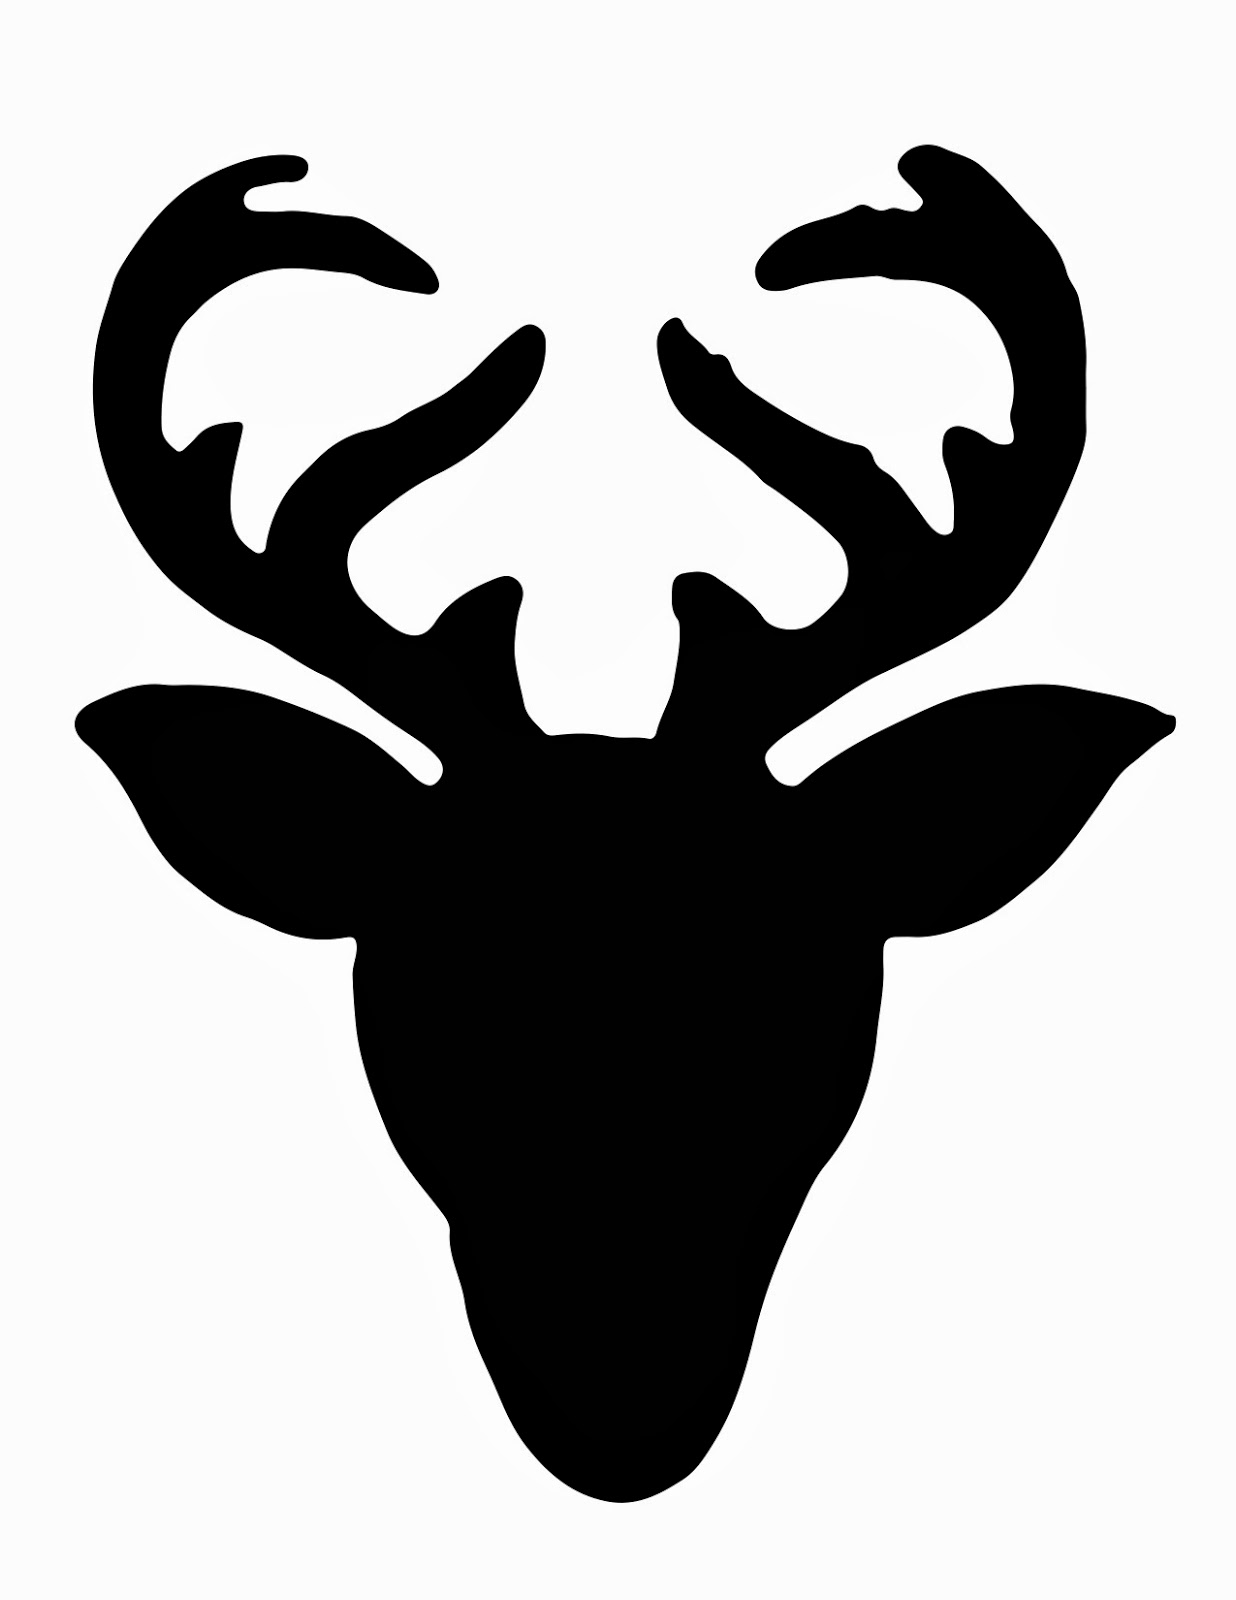 Reindeer Head Silhouette   Clipart Best   Clipart Best